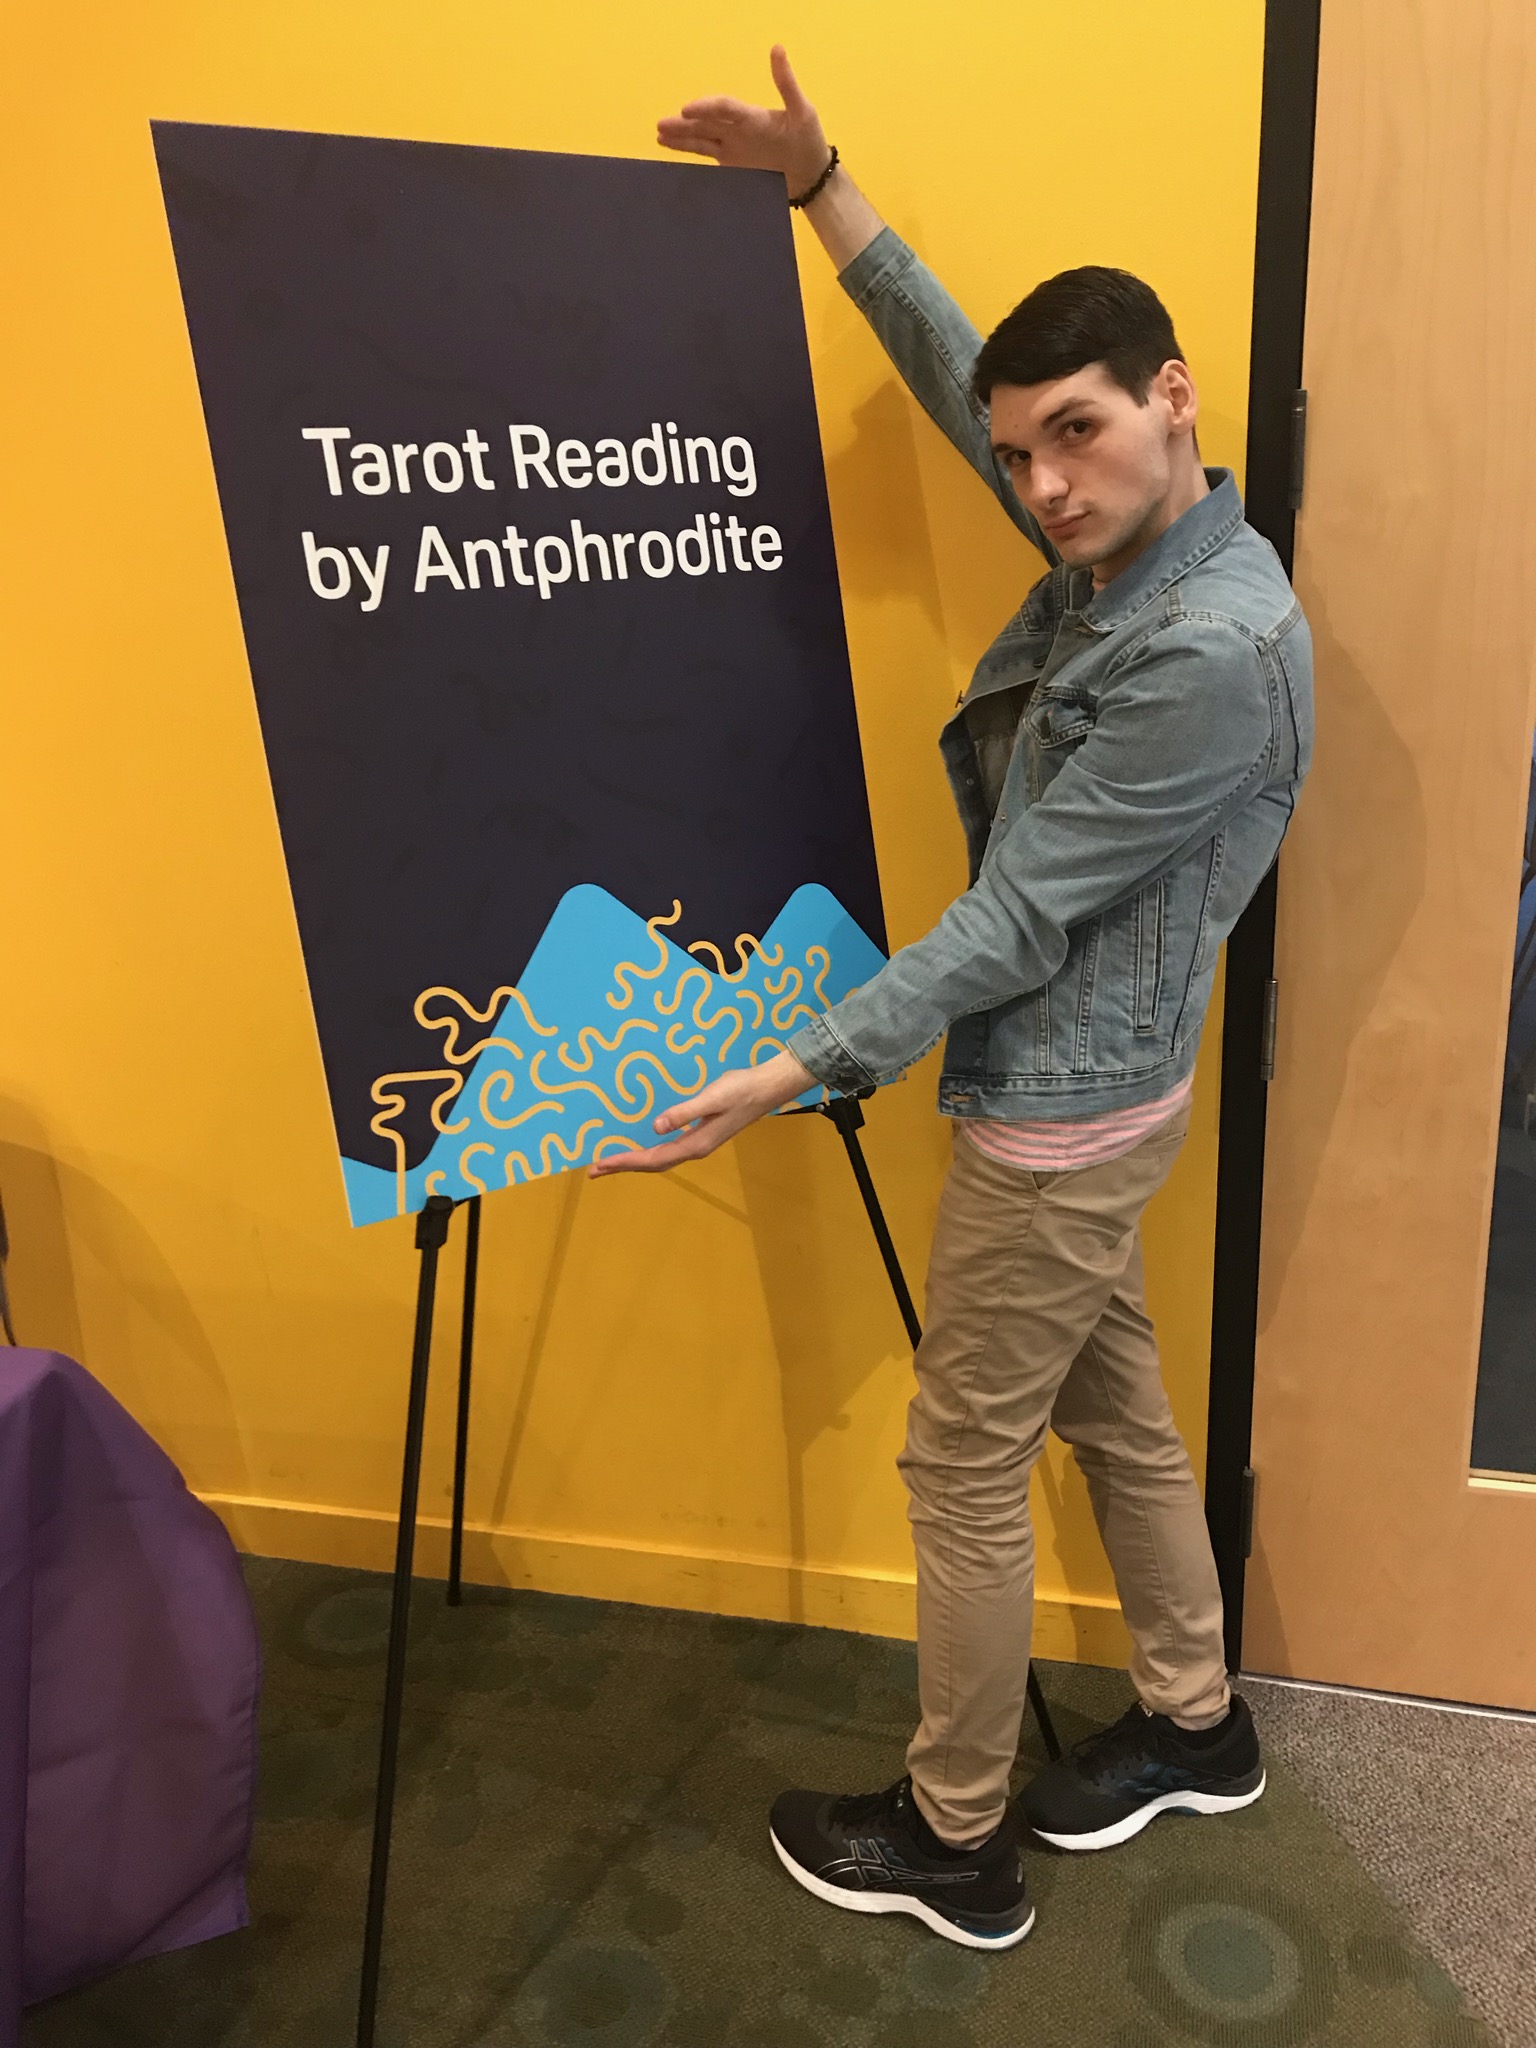 Tarot Reading by Antphrodite